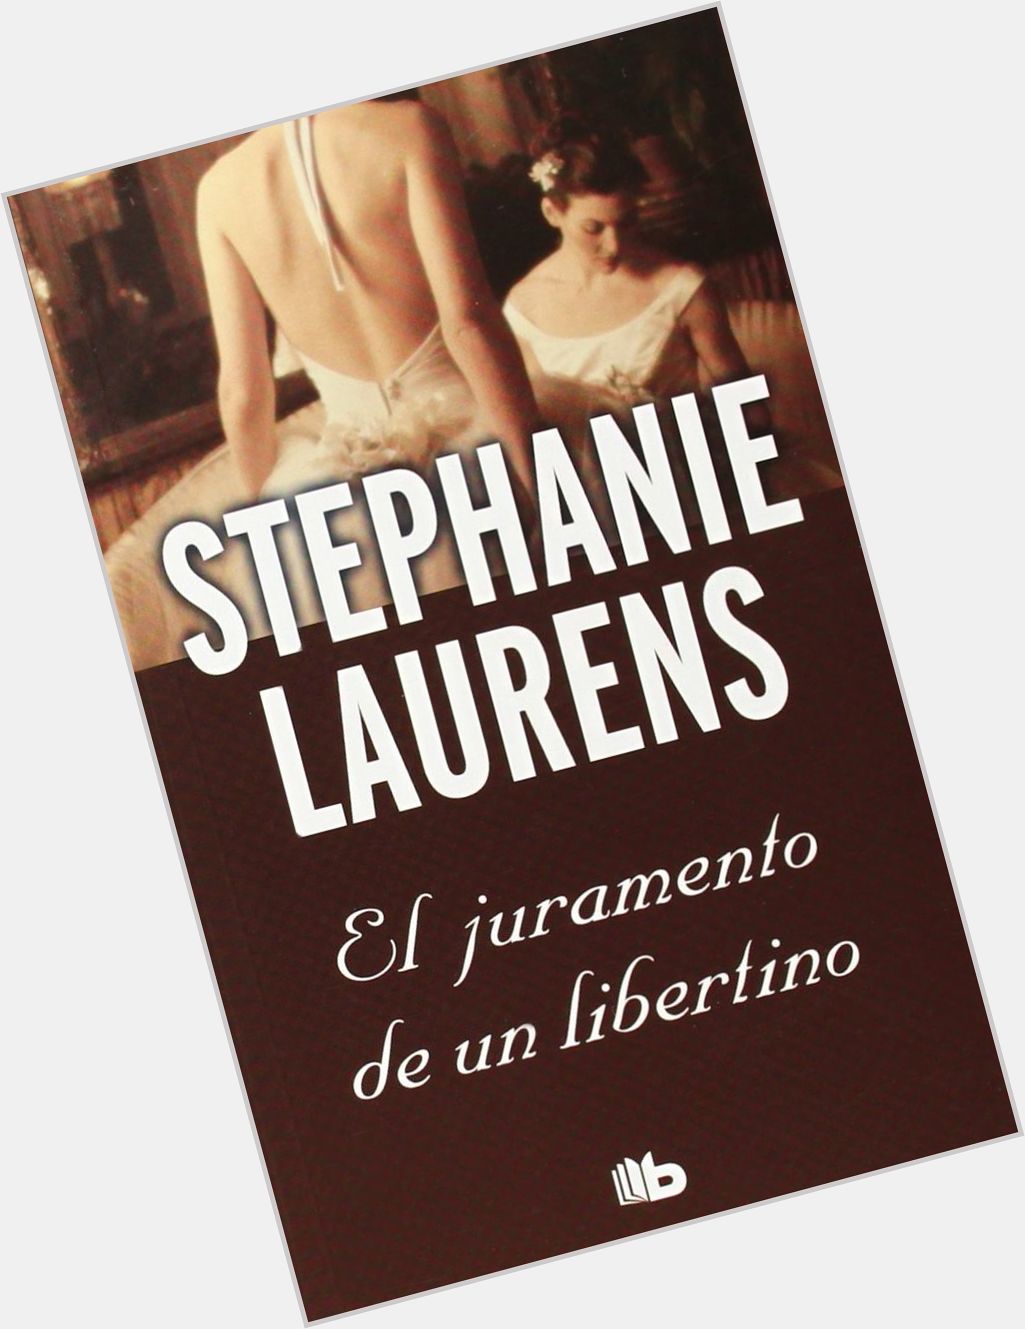 <a href="/hot-women/stephanie-laurens/where-dating-news-photos">Stephanie Laurens</a>  